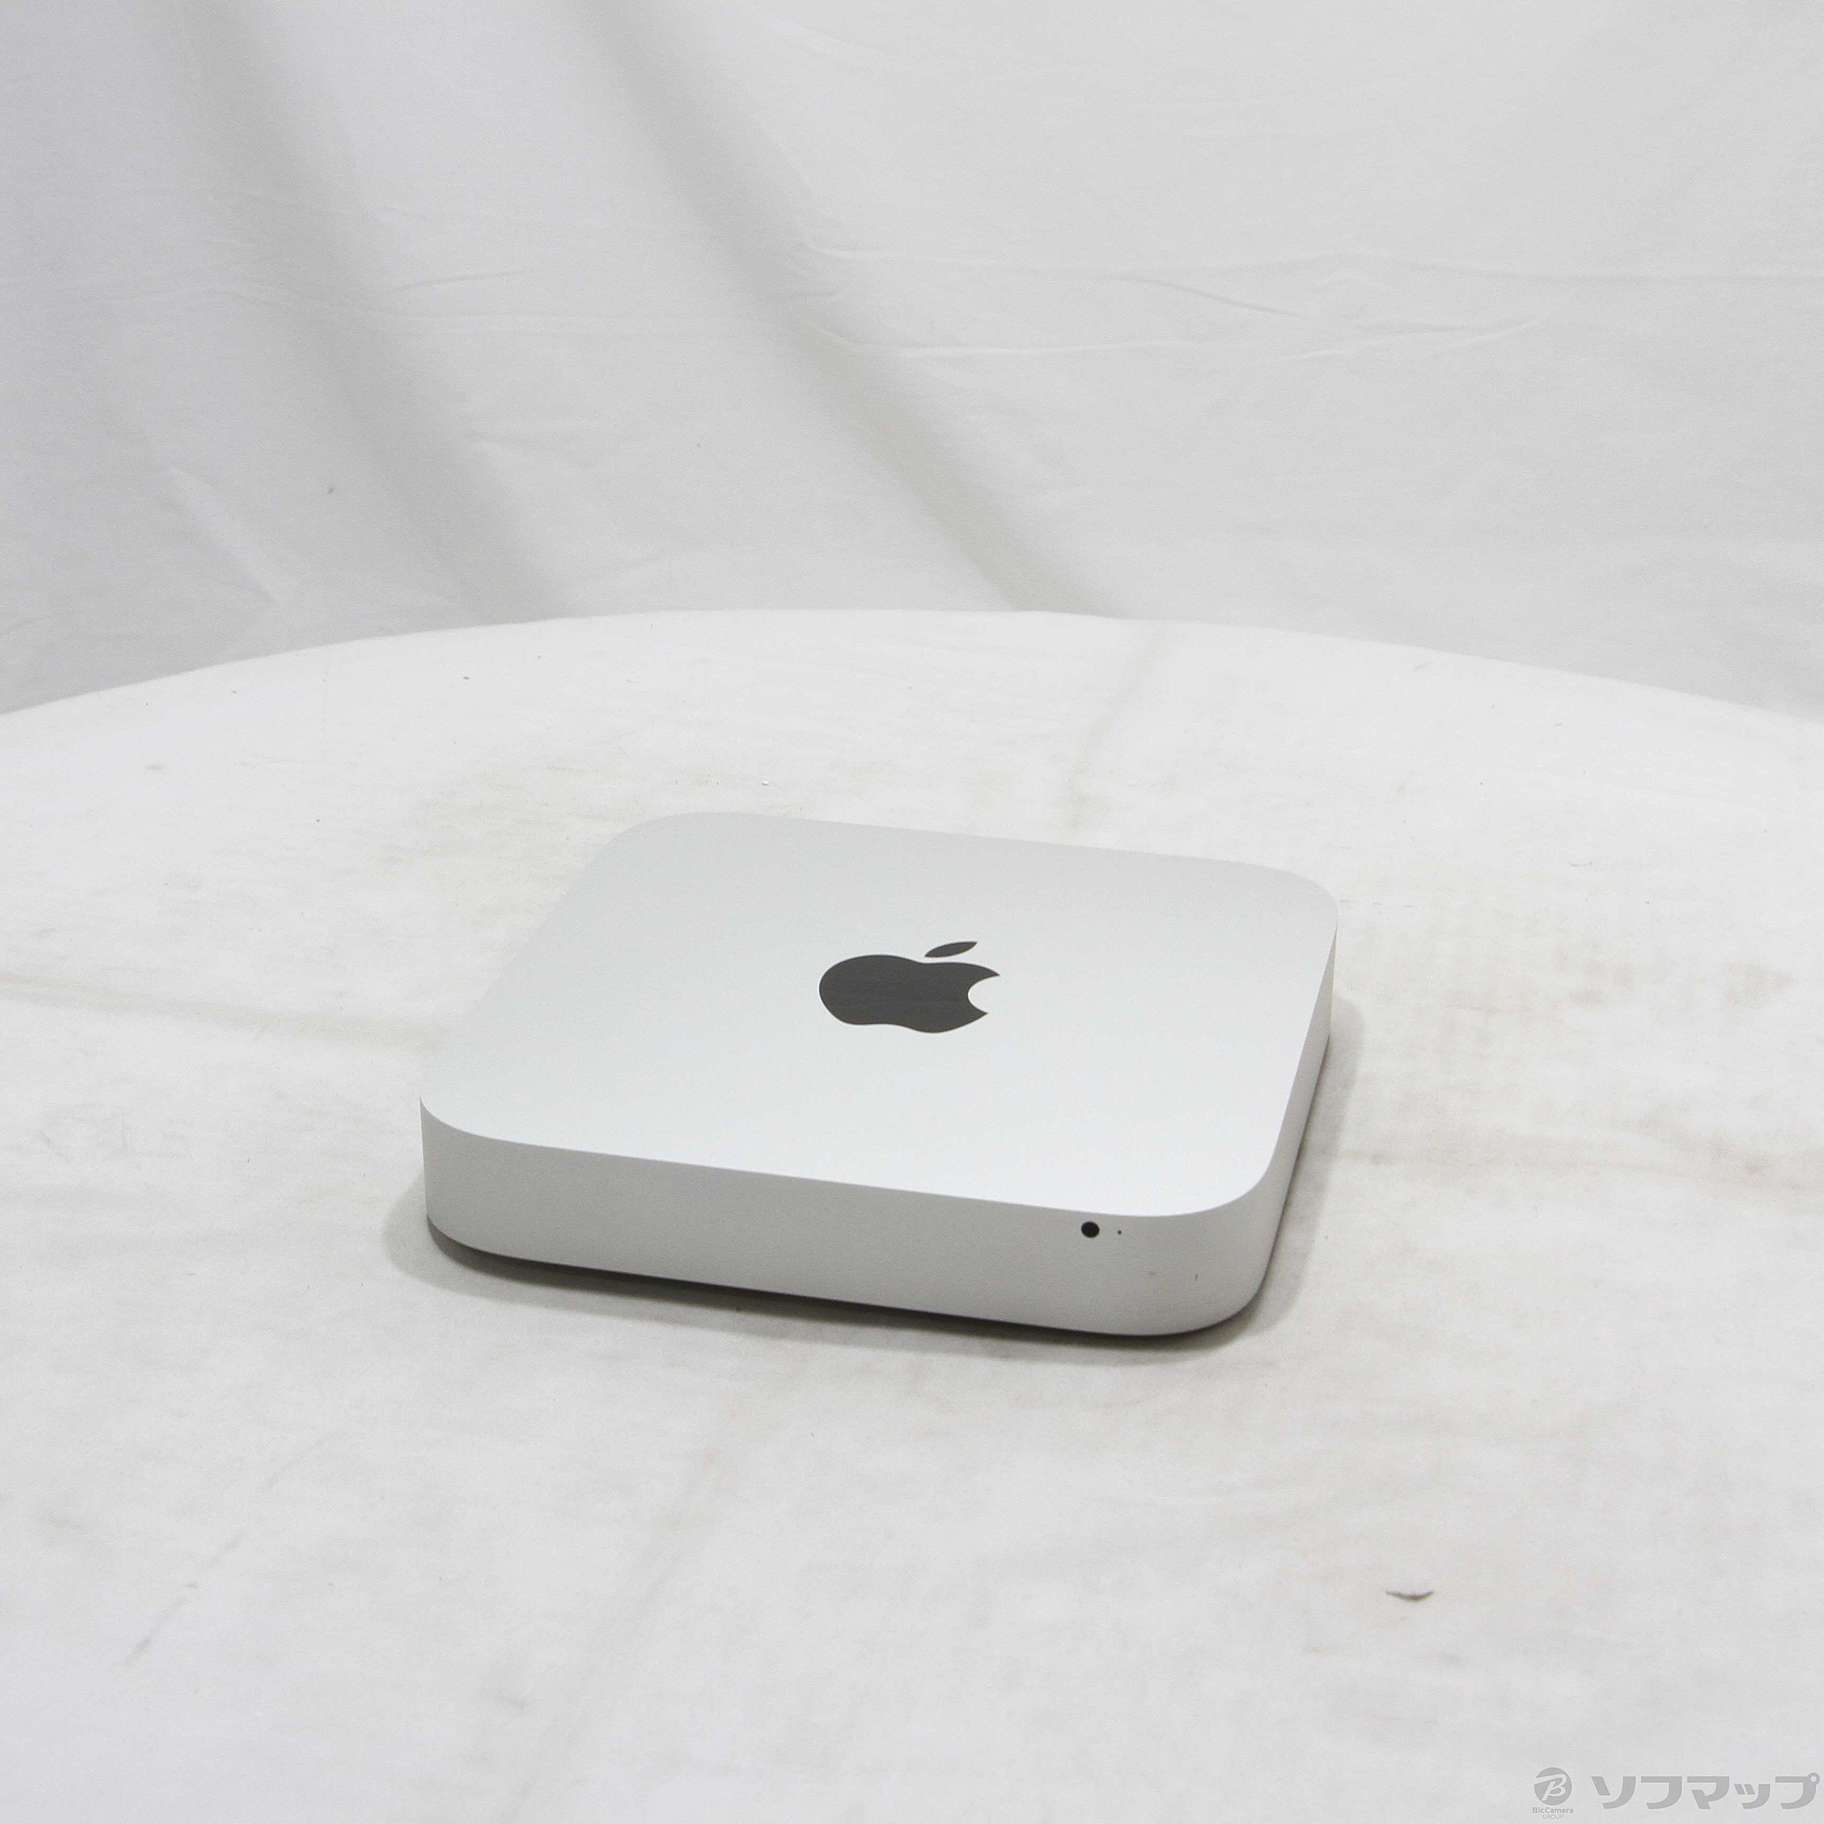 中古)Apple Mac mini Late 2014 MGEQ2J A Core_i5 2.8GHz 16GB